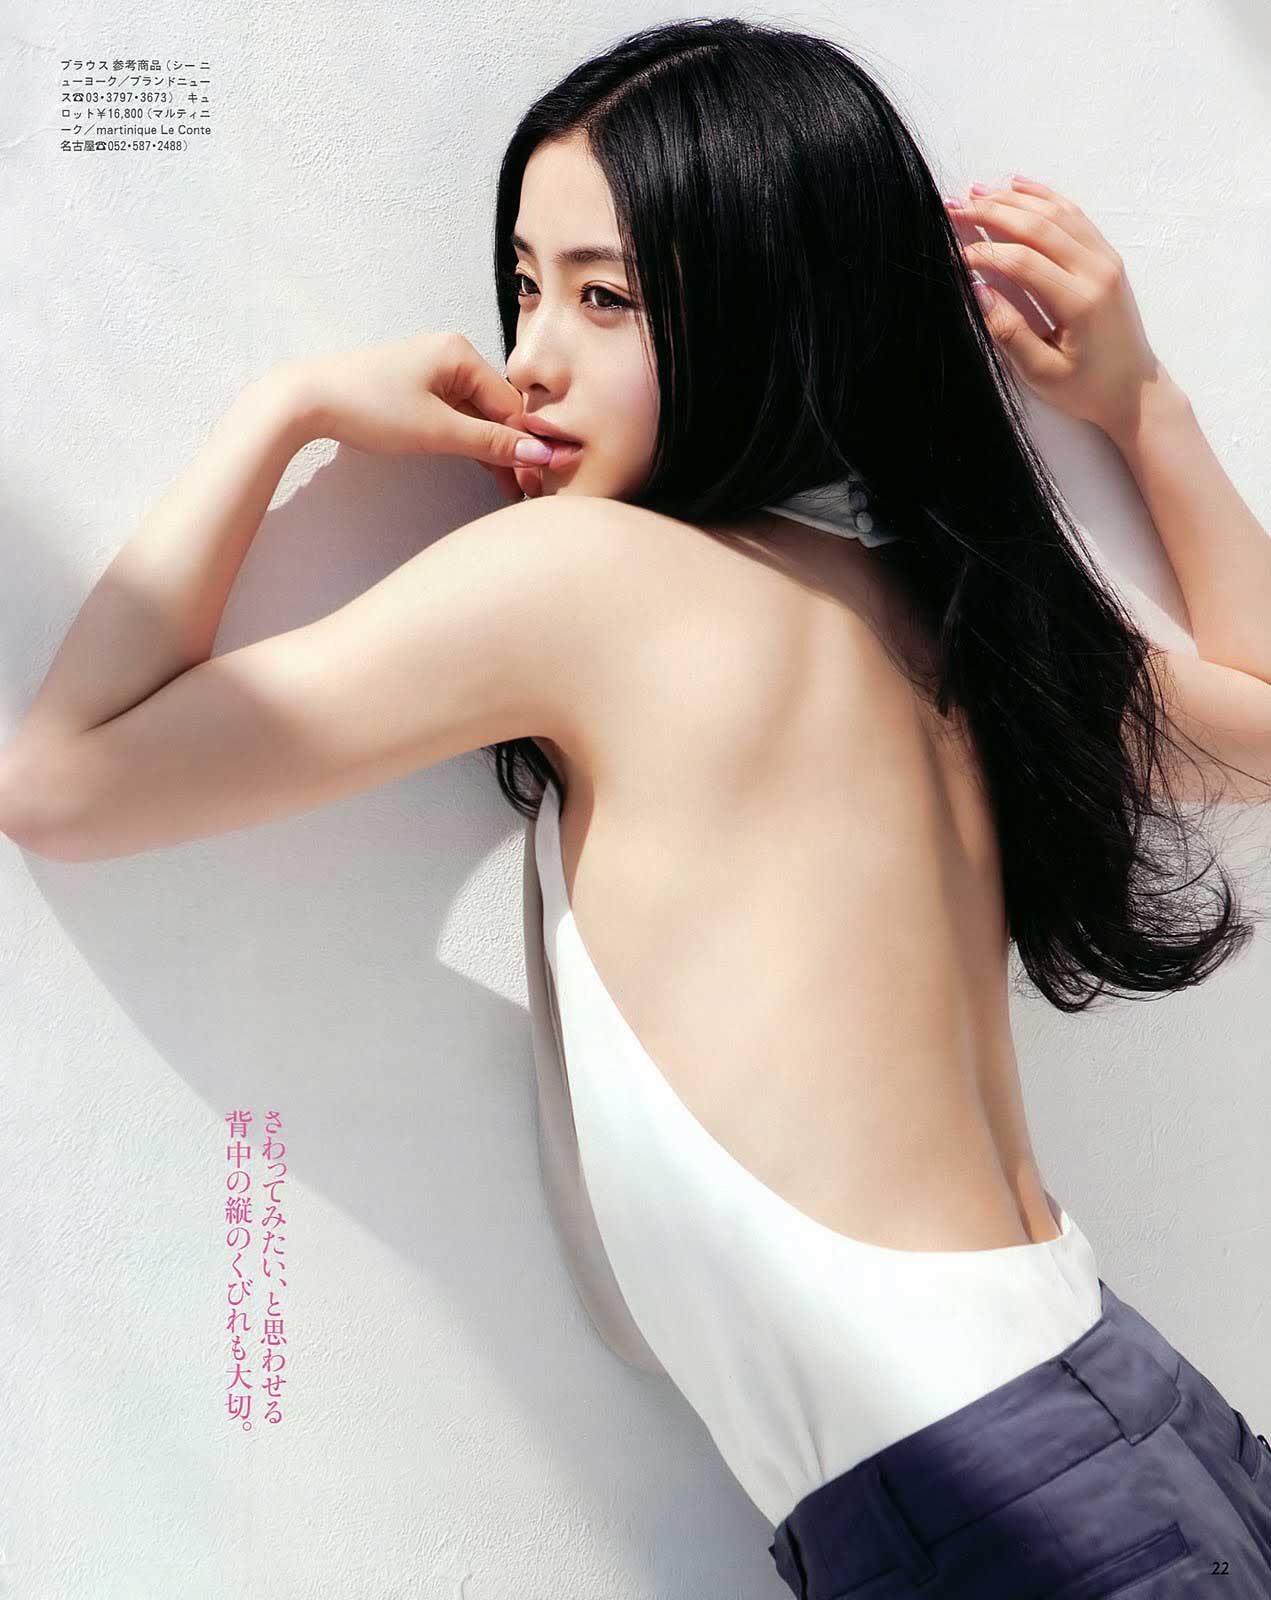 Satomi Ishihara 04